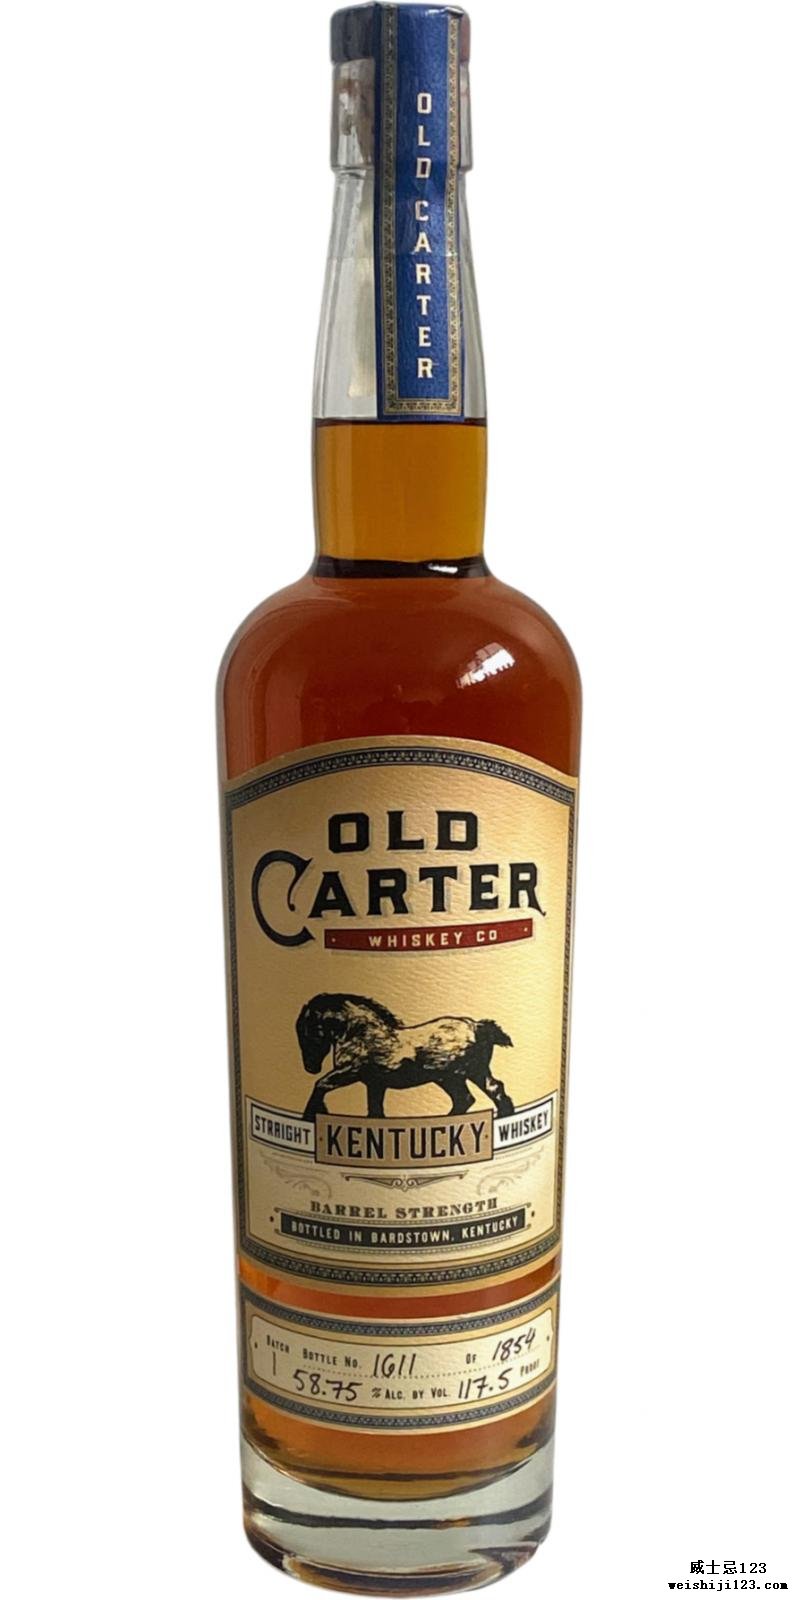 Old Carter Straight Kentucky Whiskey